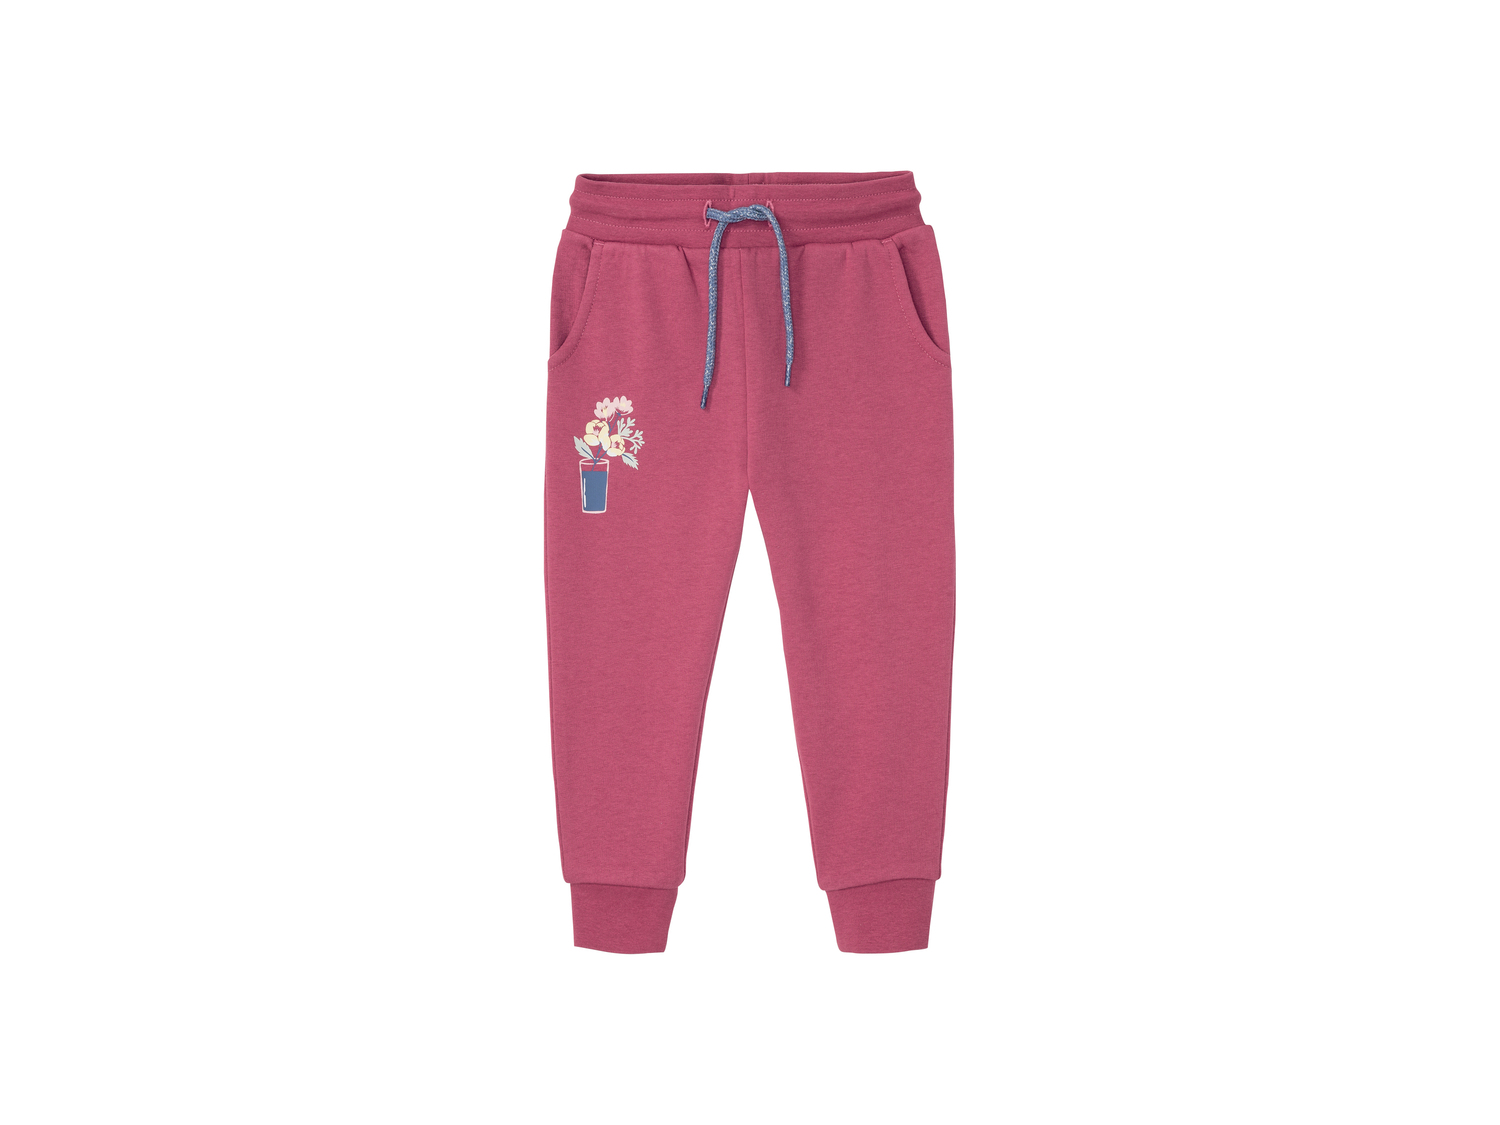 Pantaloni sportivi per bambina Lupilu, prezzo 4.99 &#8364; 
Misure: 1-6 anni
Taglie ...